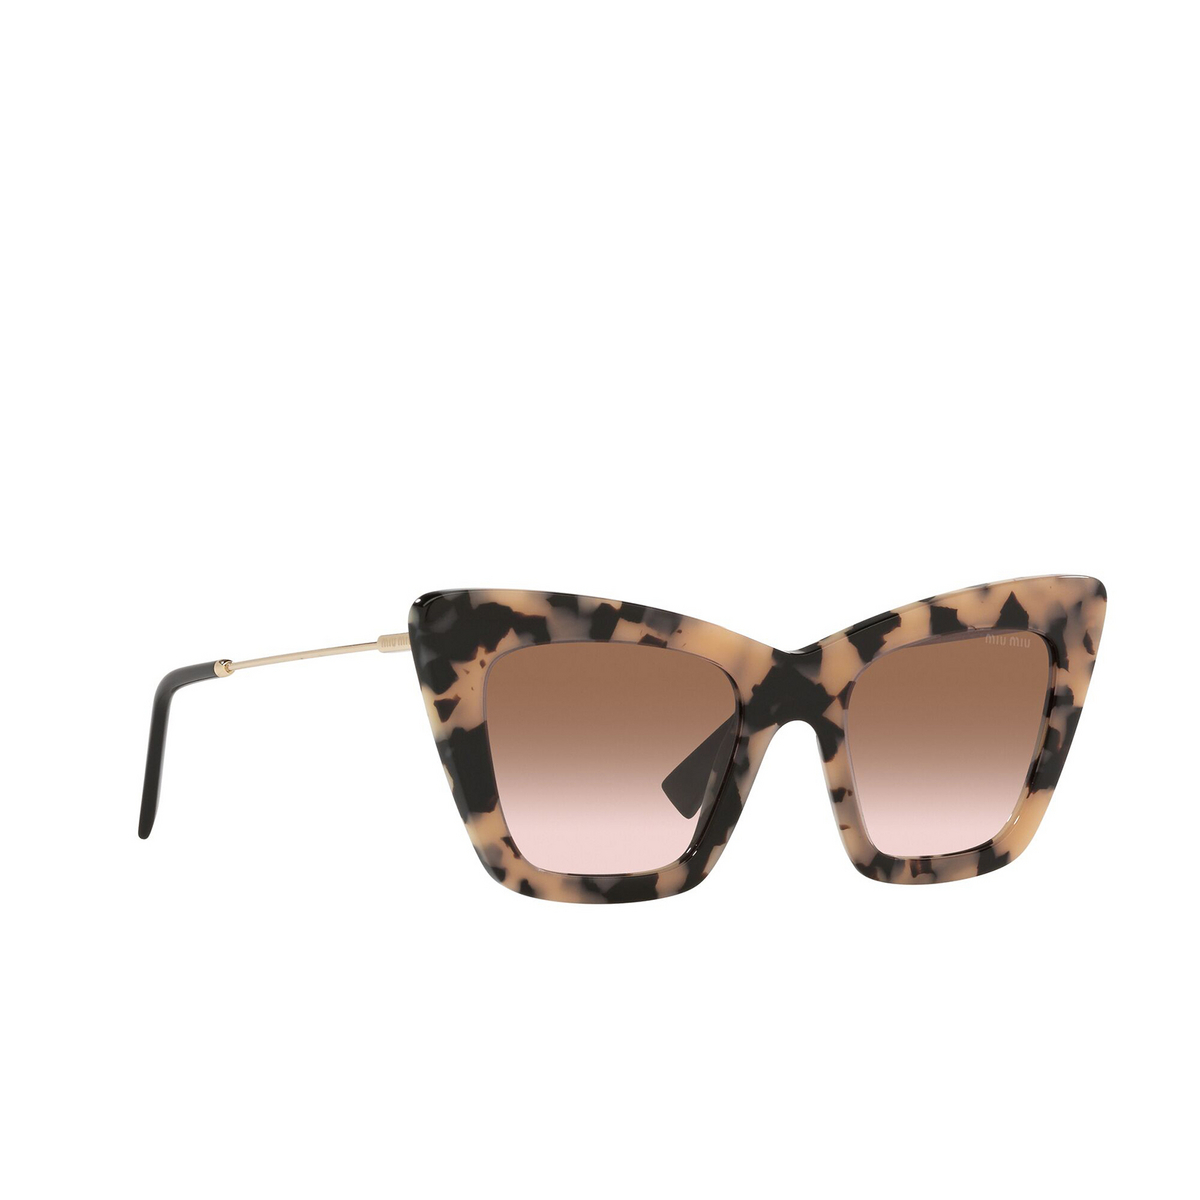 Miu Miu® Cat-eye Sunglasses: MU 01WS color Havana Pink 07D0A6 - three-quarters view.